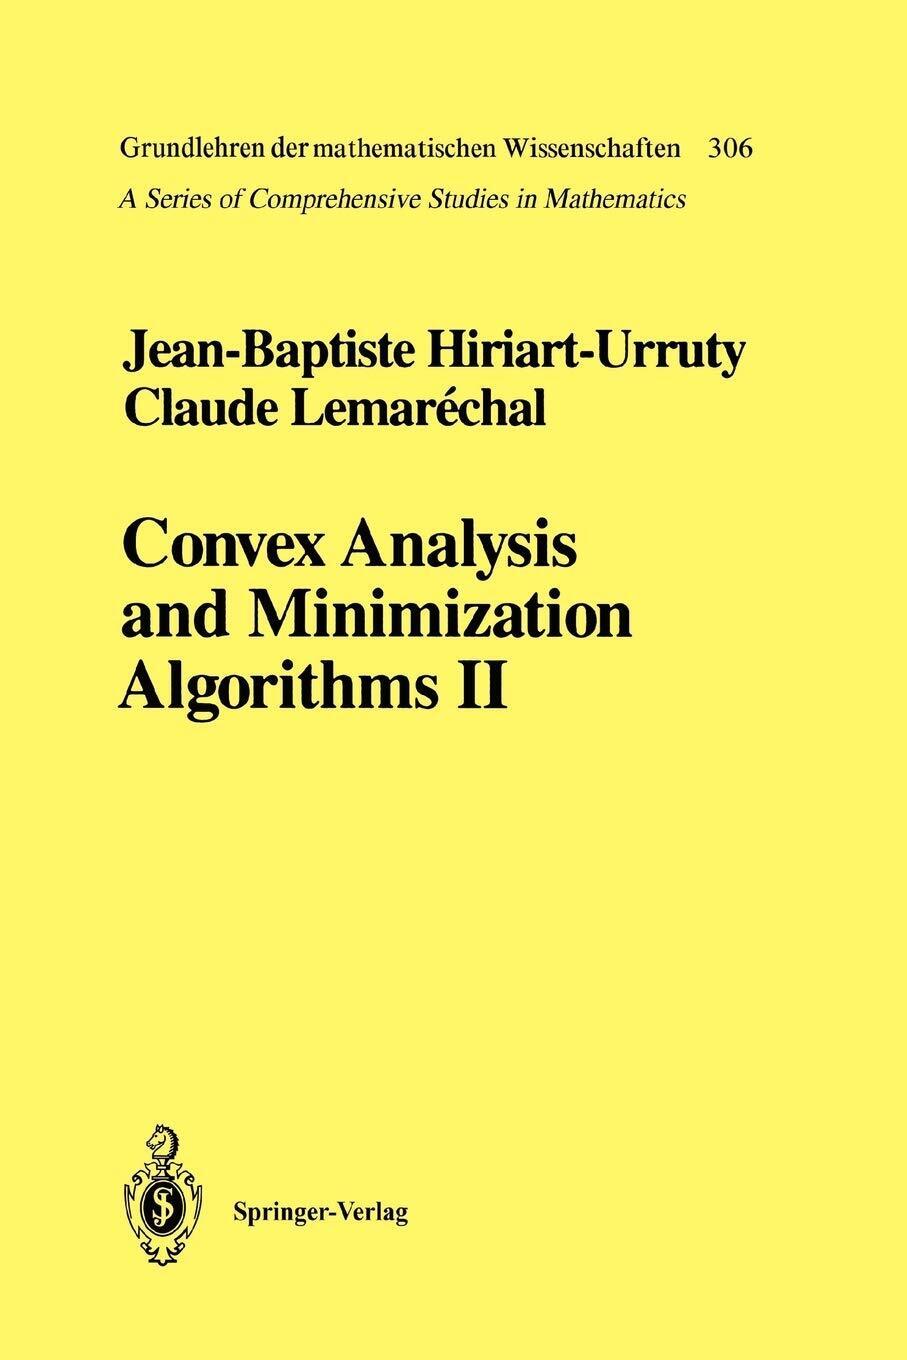 Convex Analysis and Minimization Algorithms - Springer, 2010